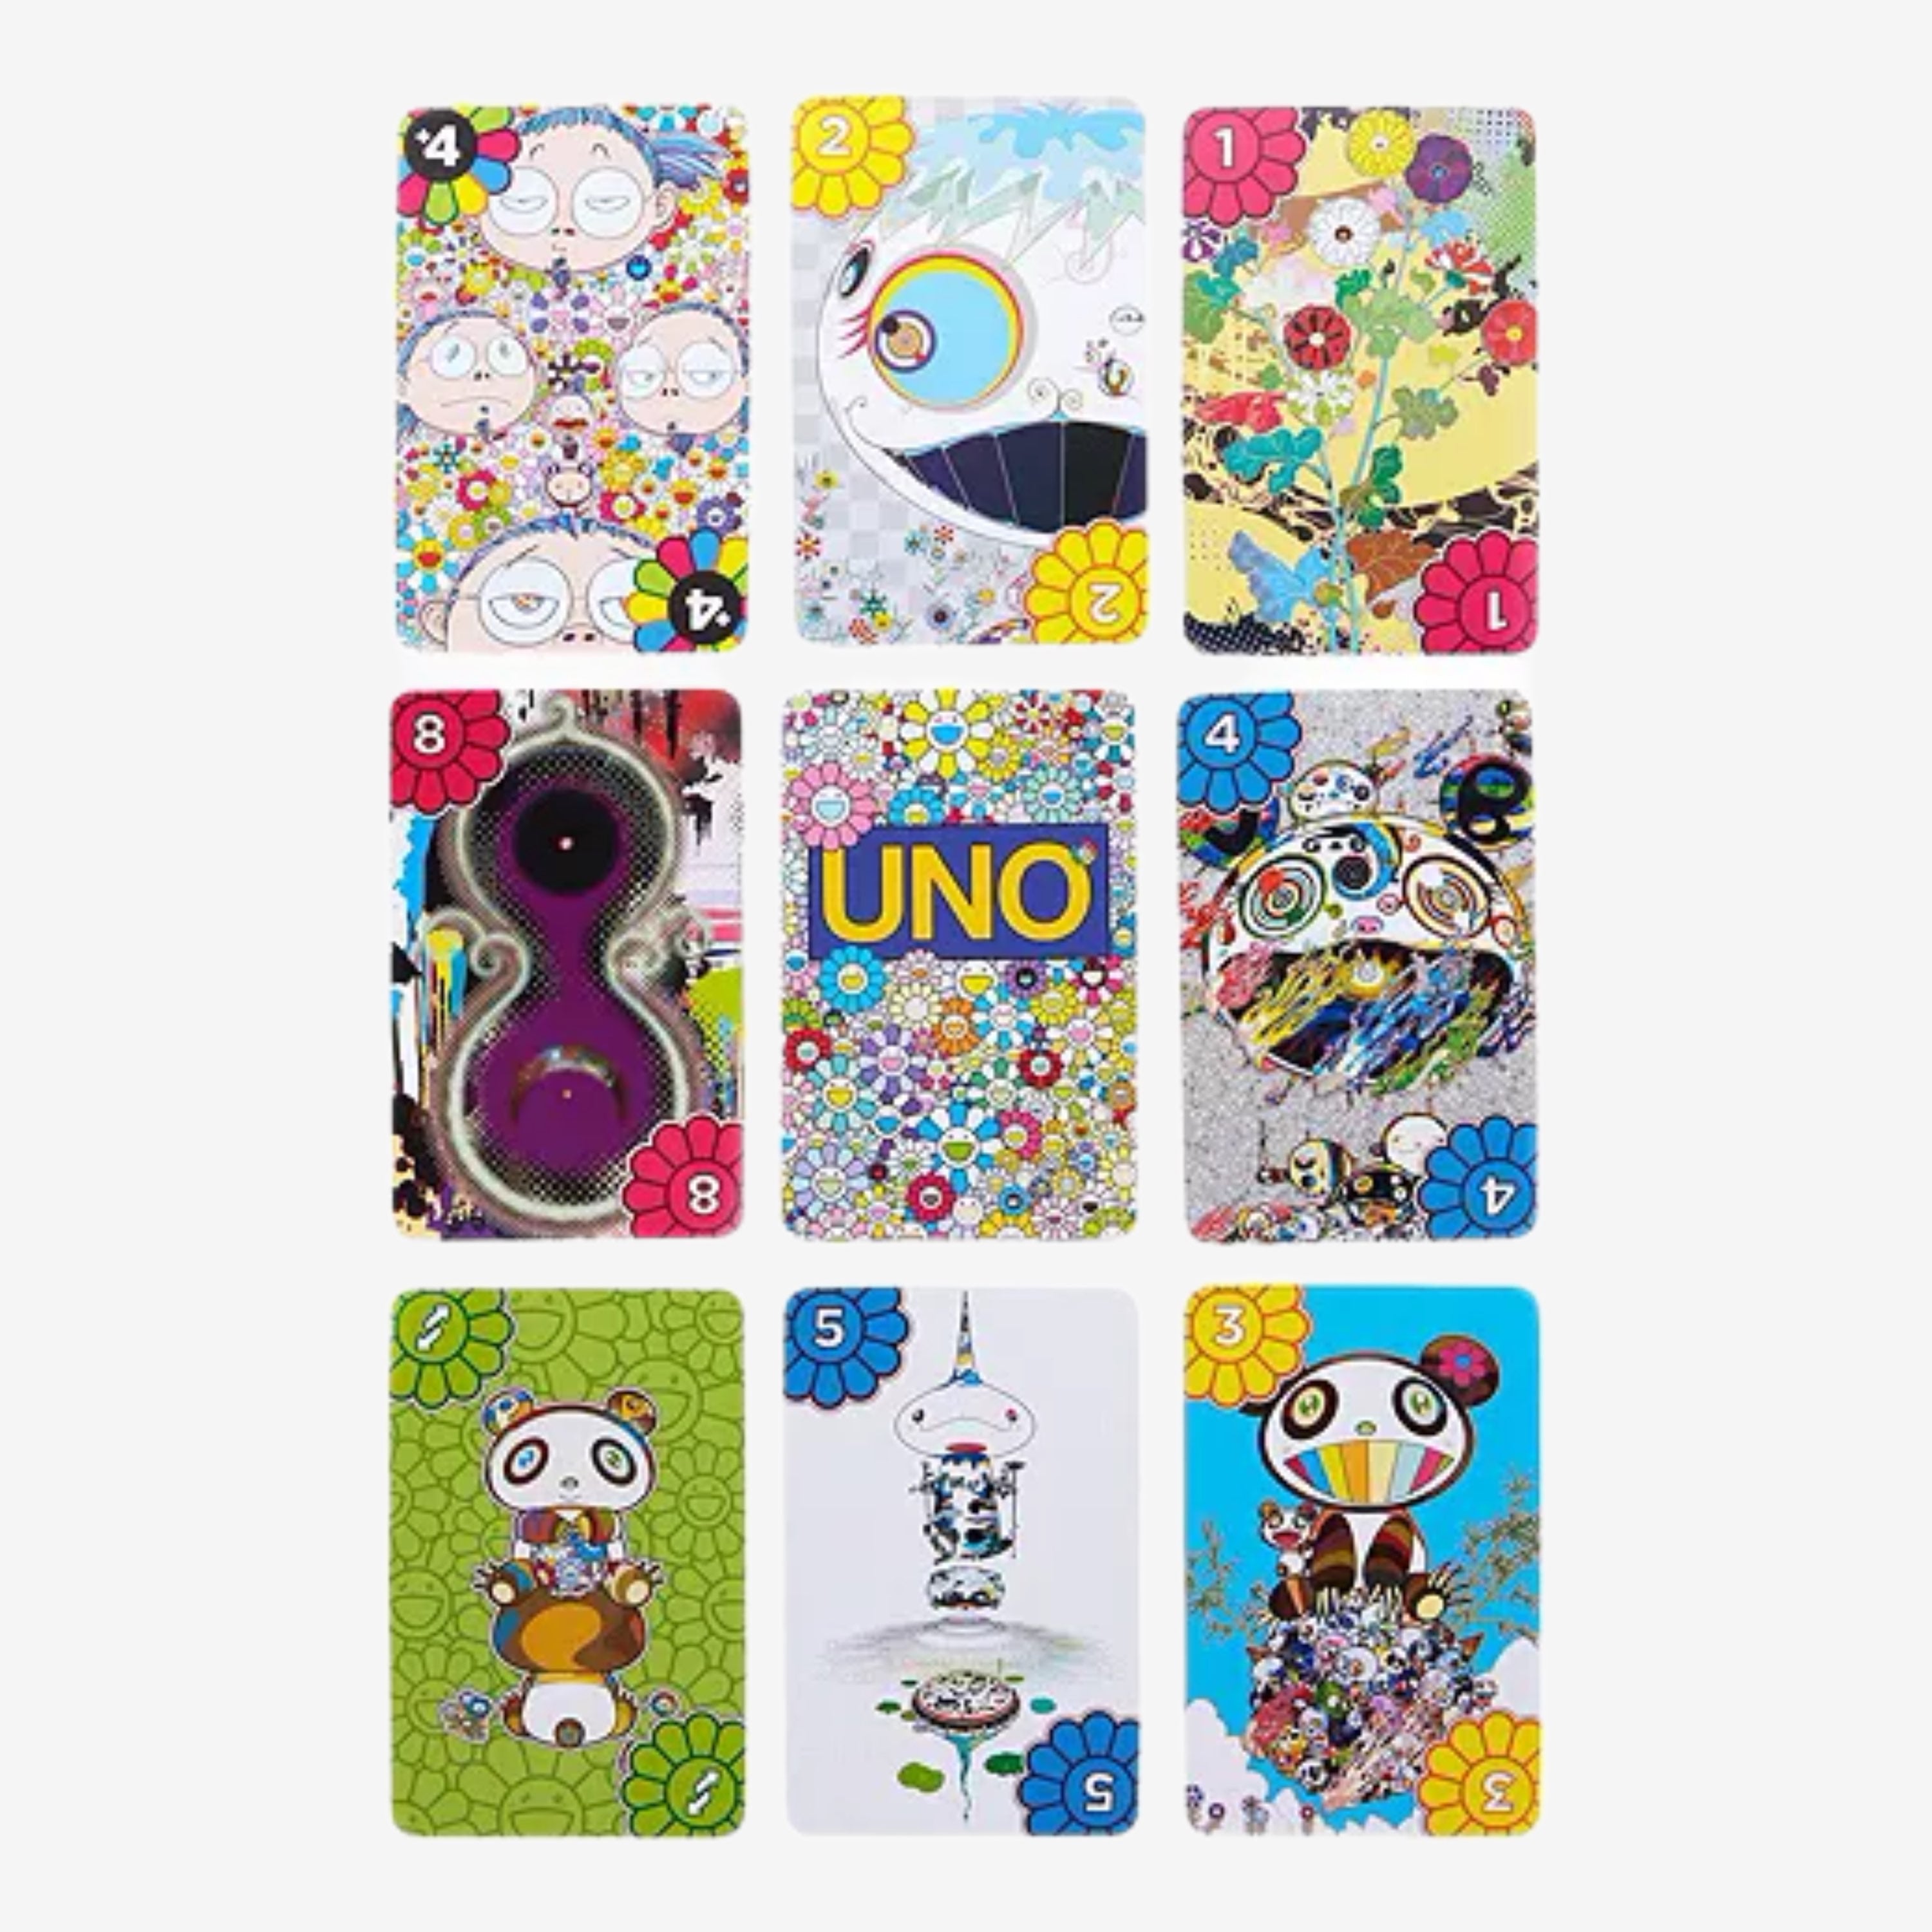 Juego de cartas coleccionables UNO 'Artiste Series' - Takashi Murakami